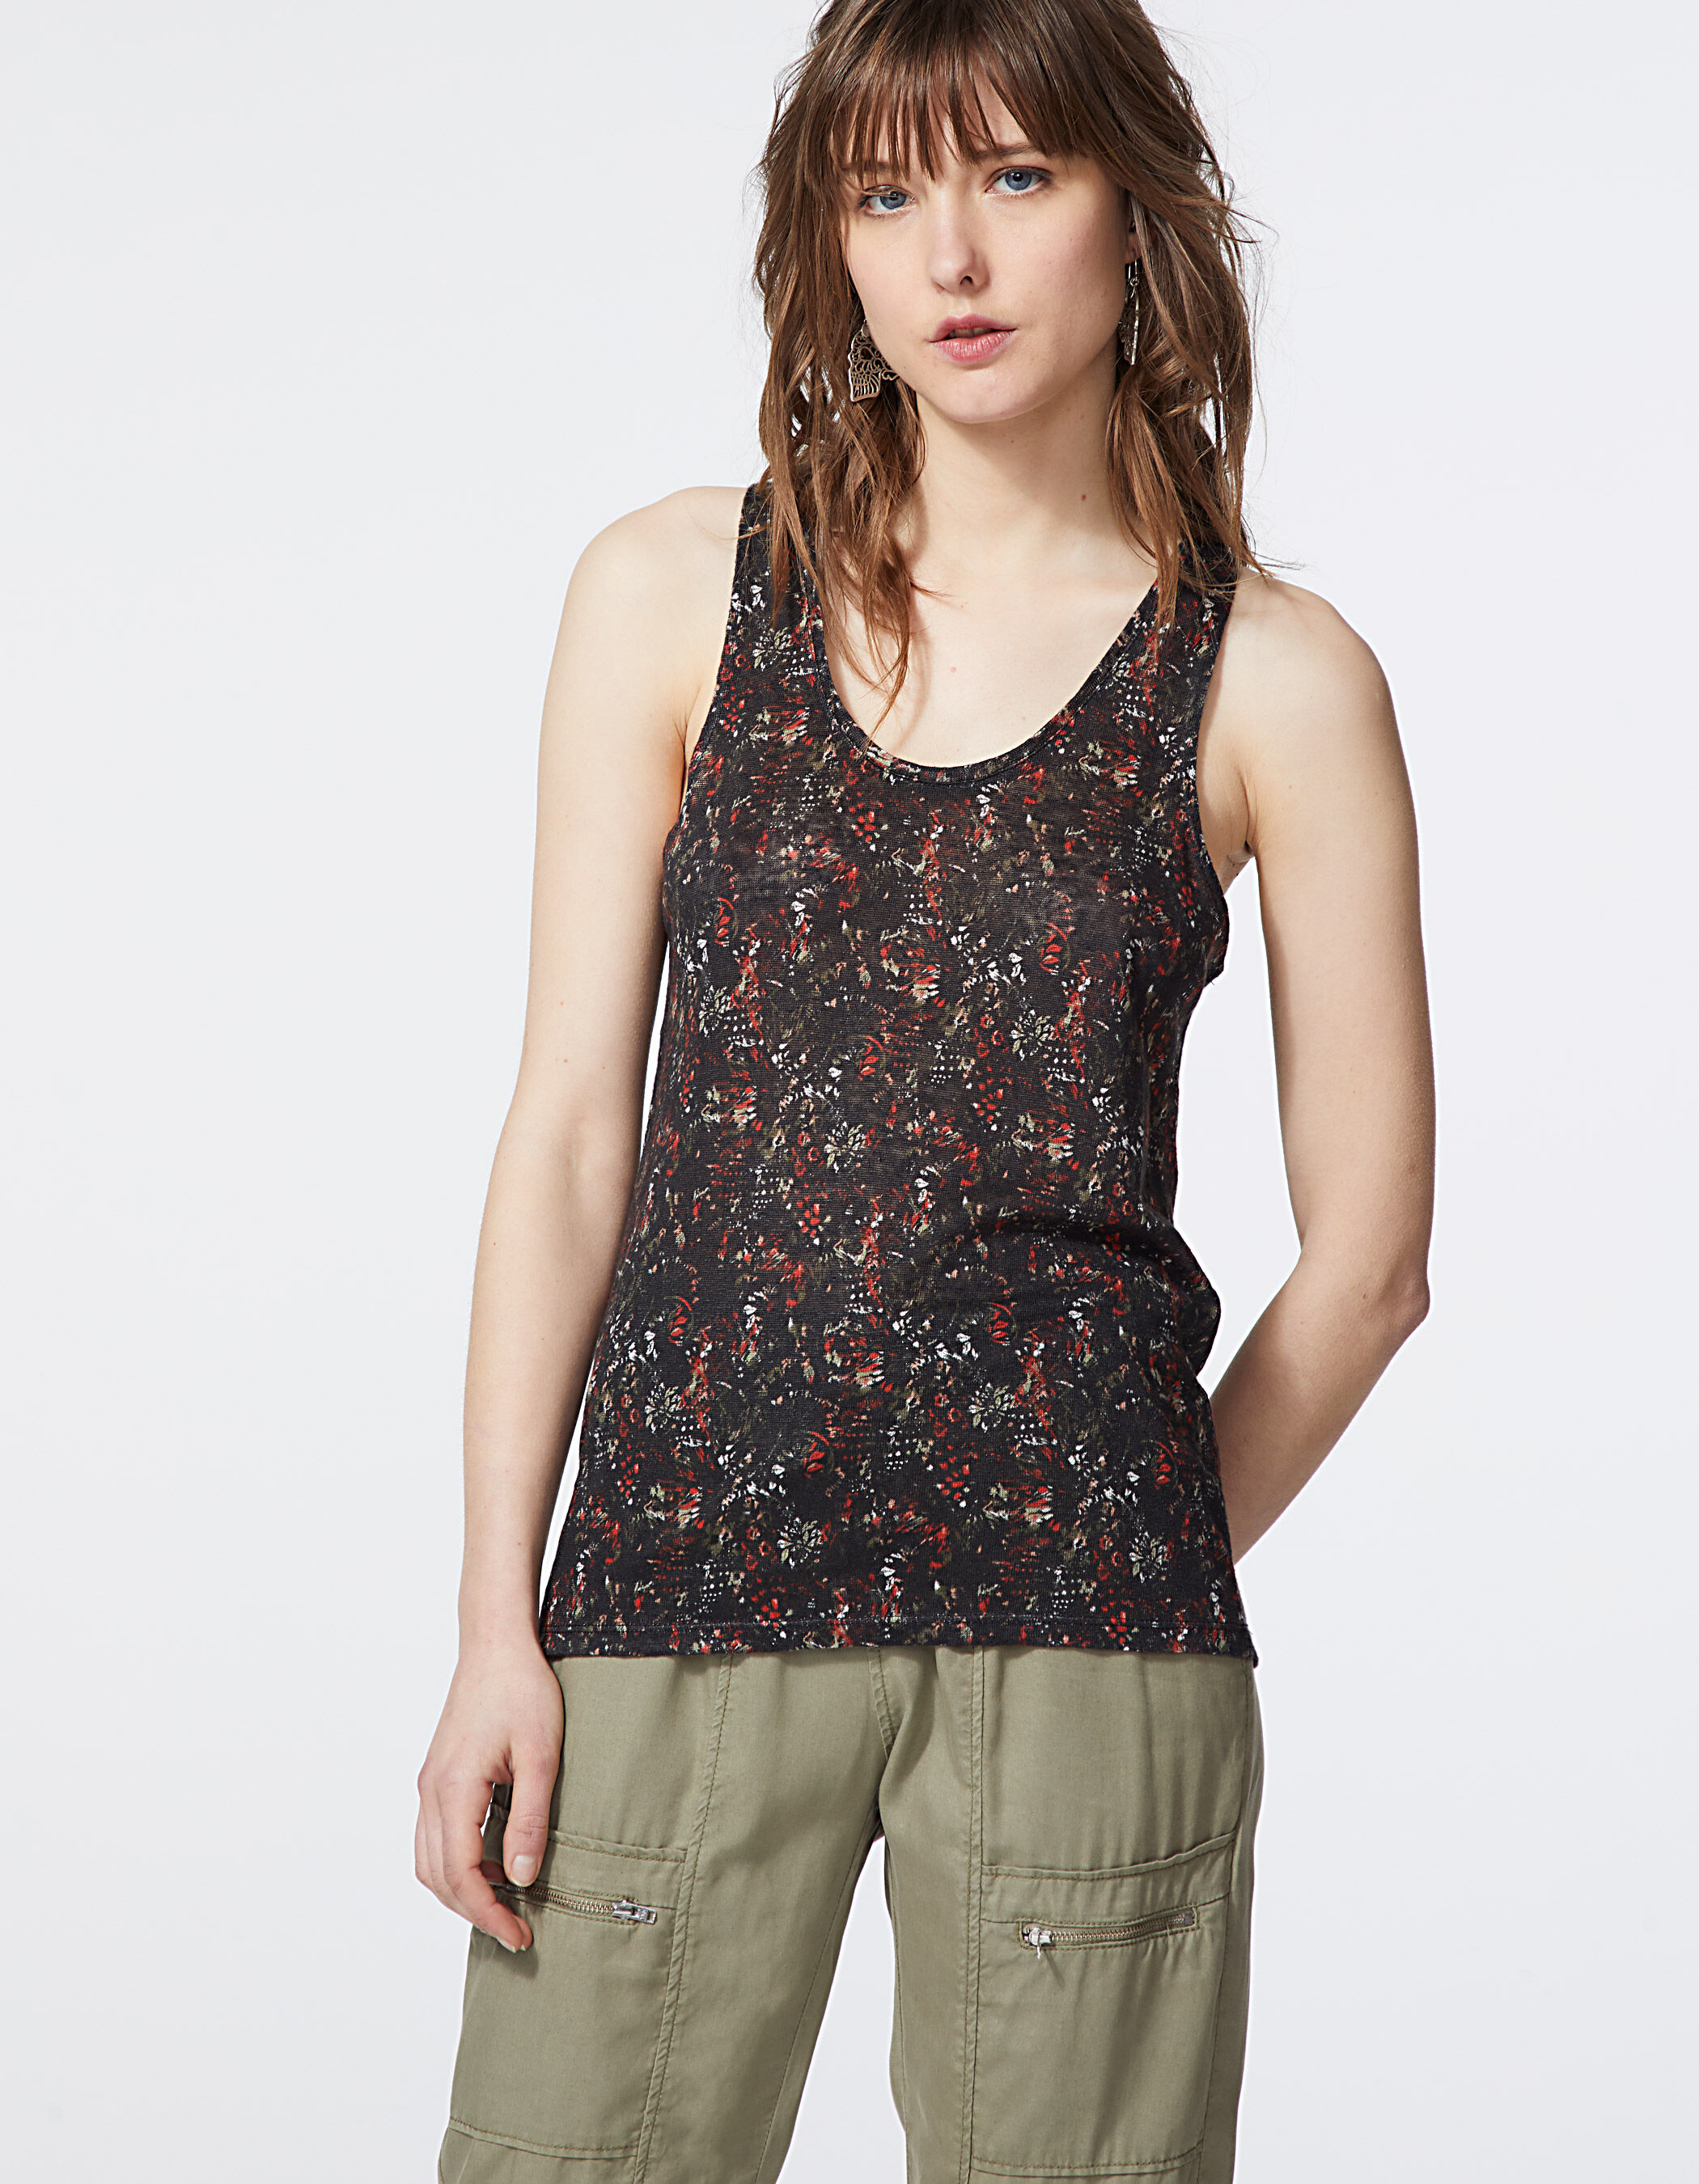 HODOD Women Ladies Floral Print Block Stitching Loose Vest Tank Camis Tops Shirt